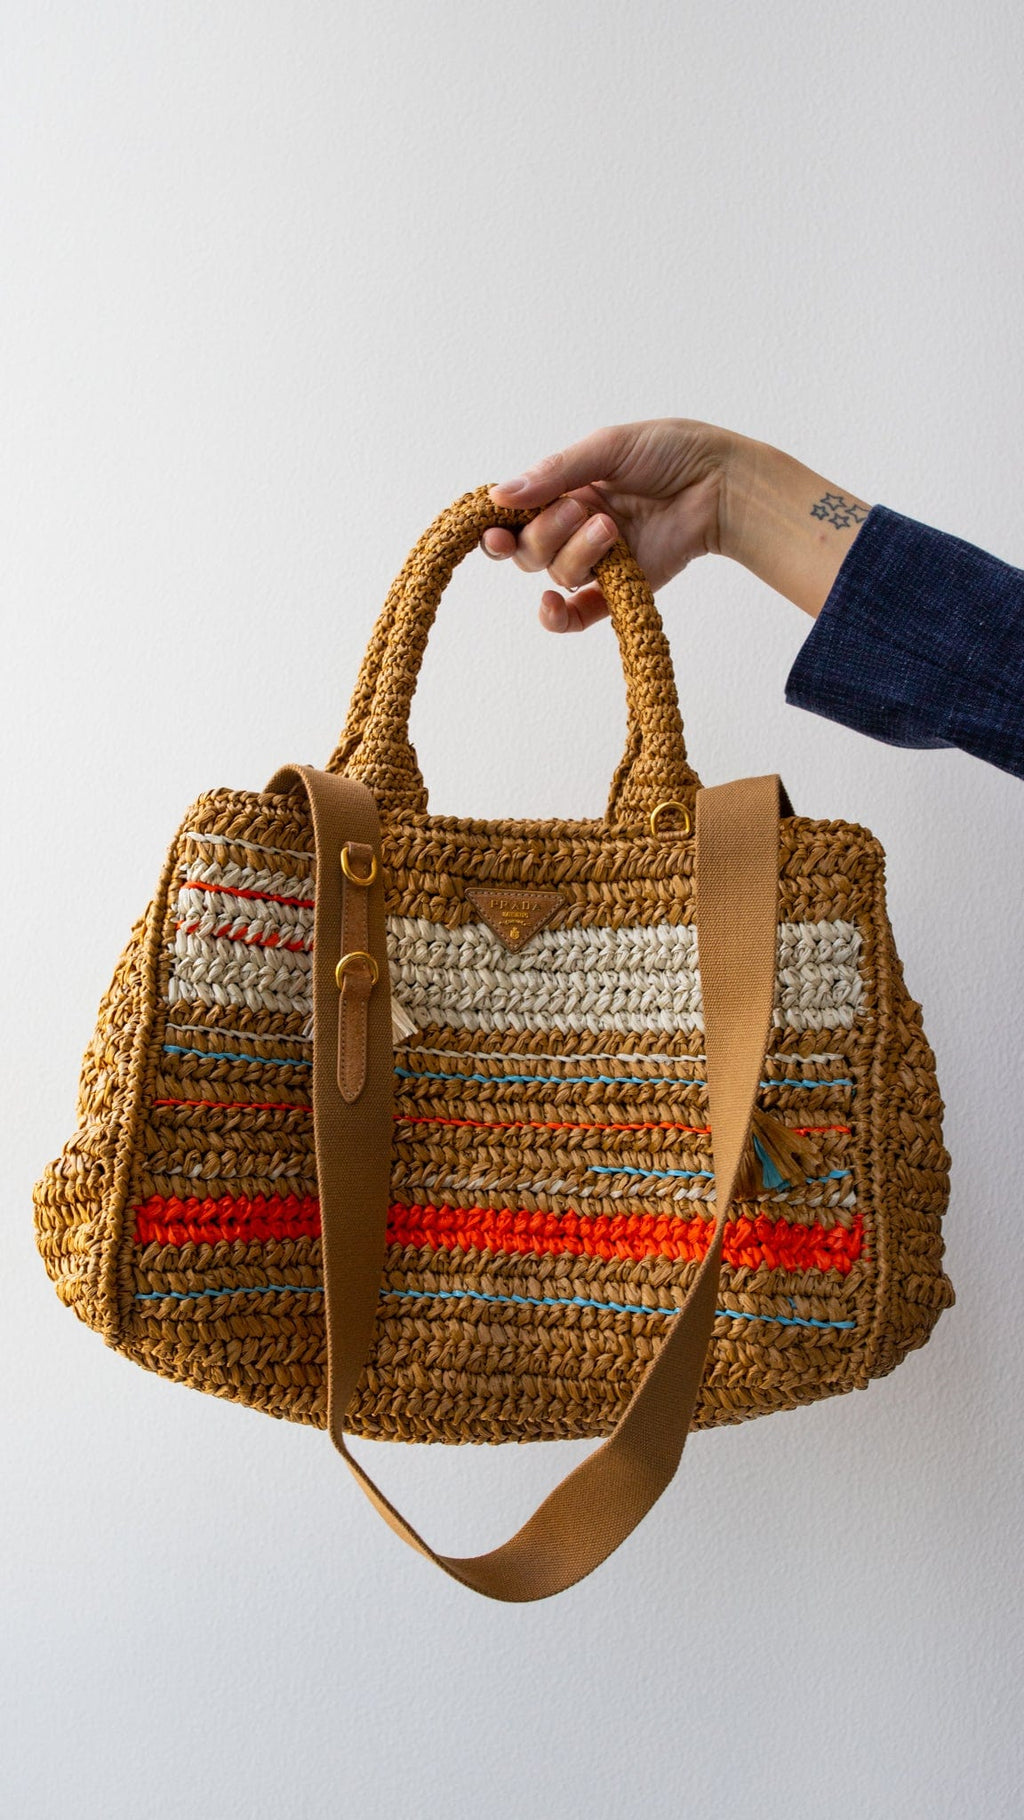 Prada - Prada Crochet Small Raffia Tote Bag